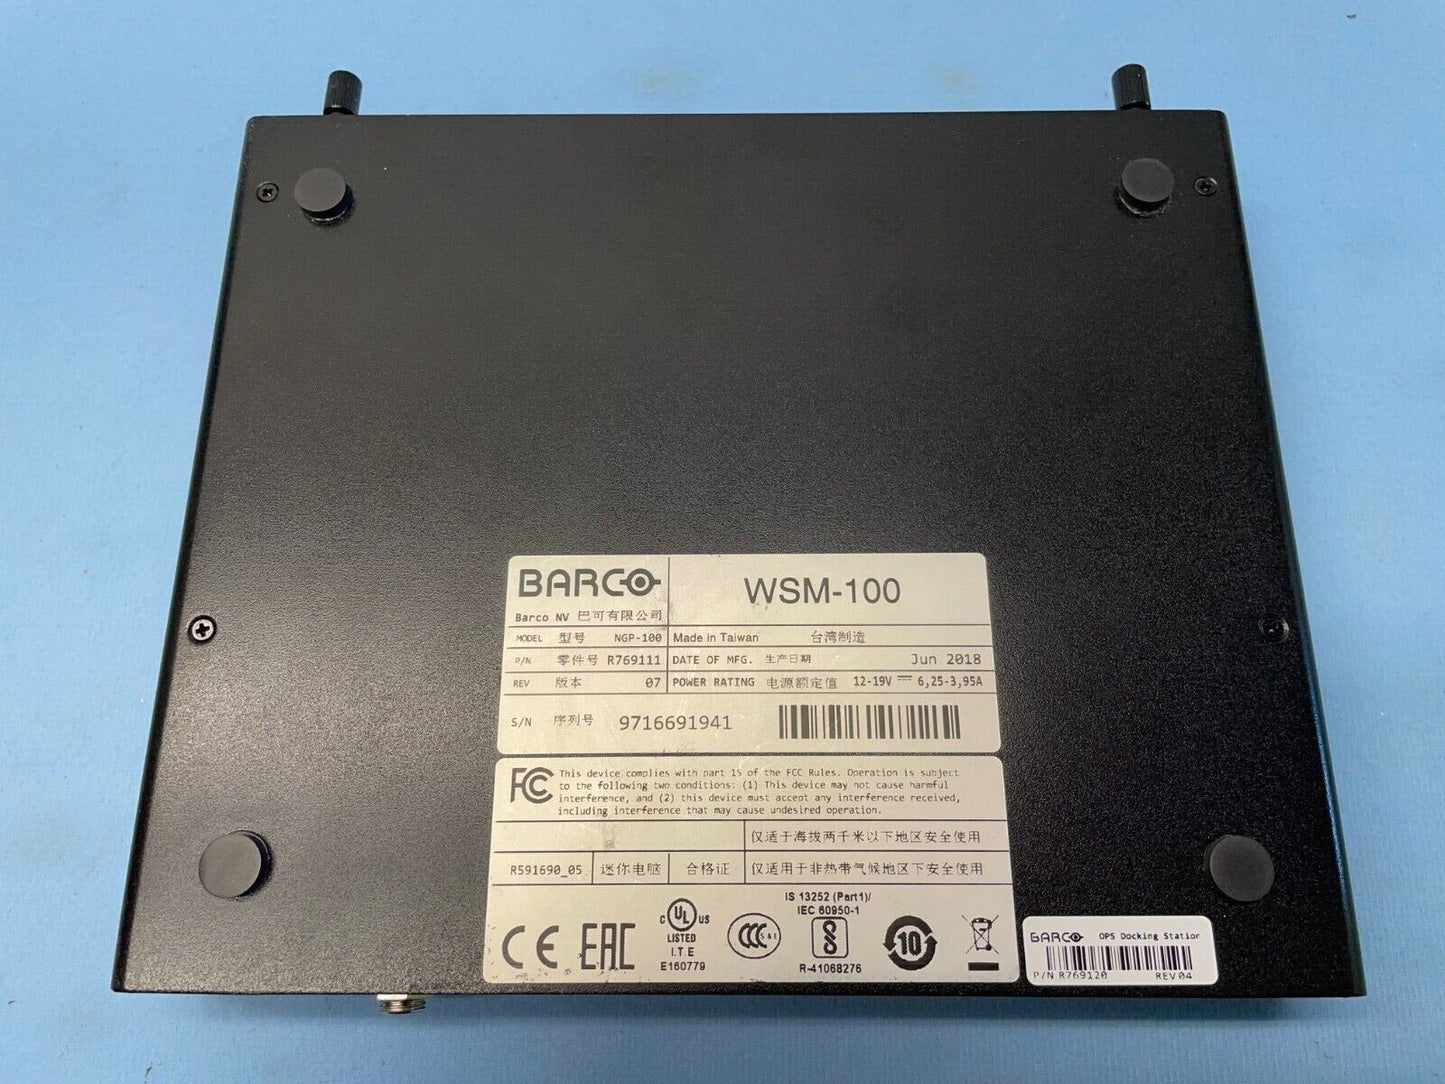 Barco WSM-100 / NGP-100 / R769111 Compact Video Wall Controller